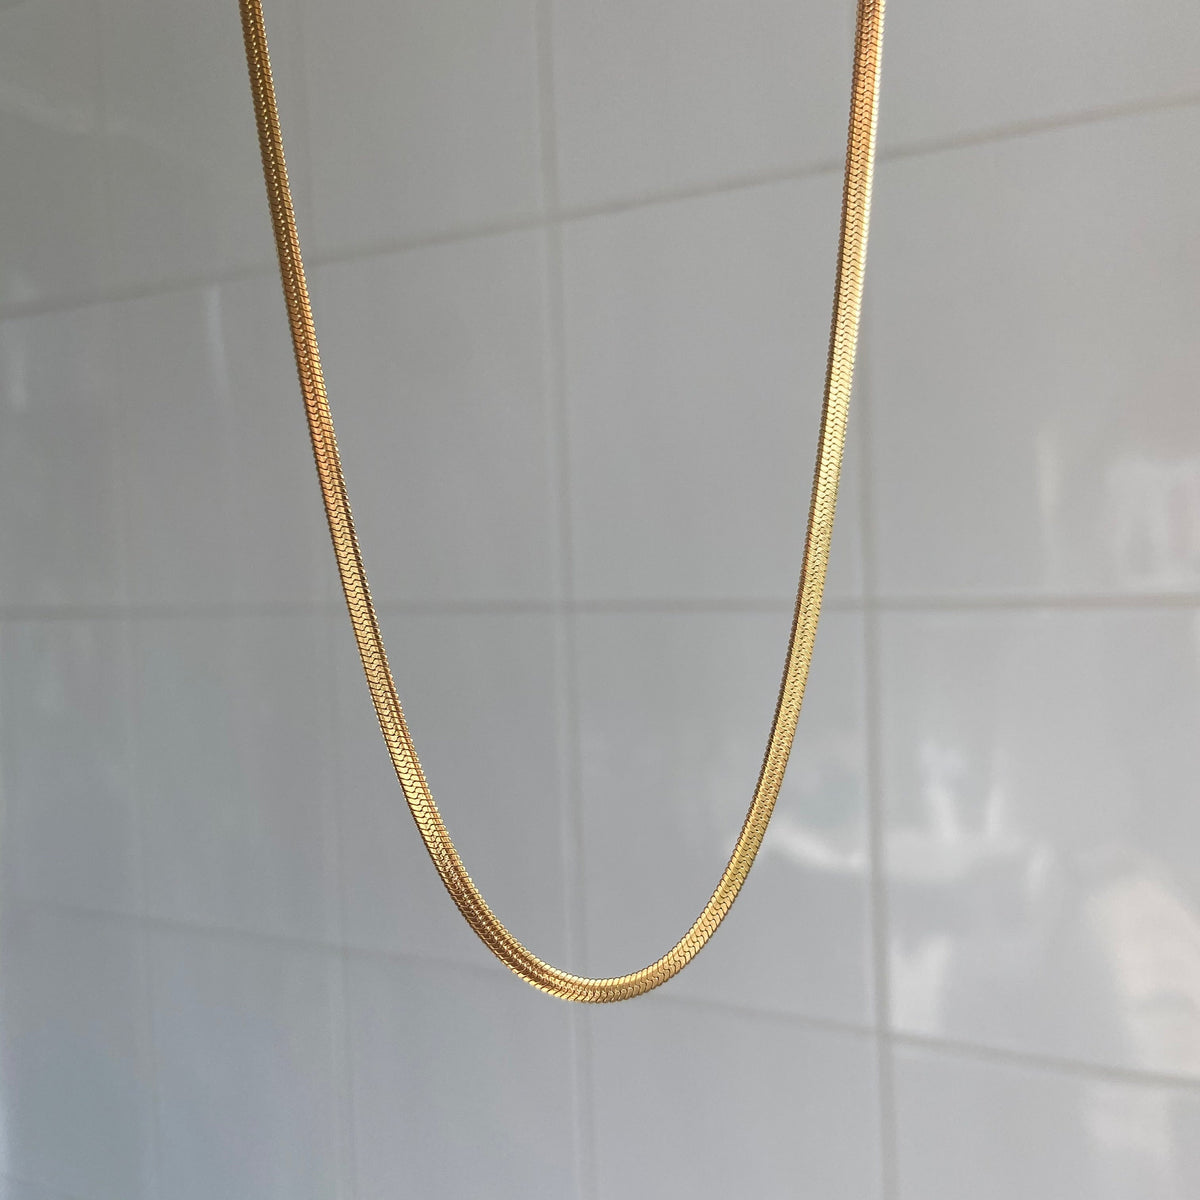 Gold flat snake chain 3mm